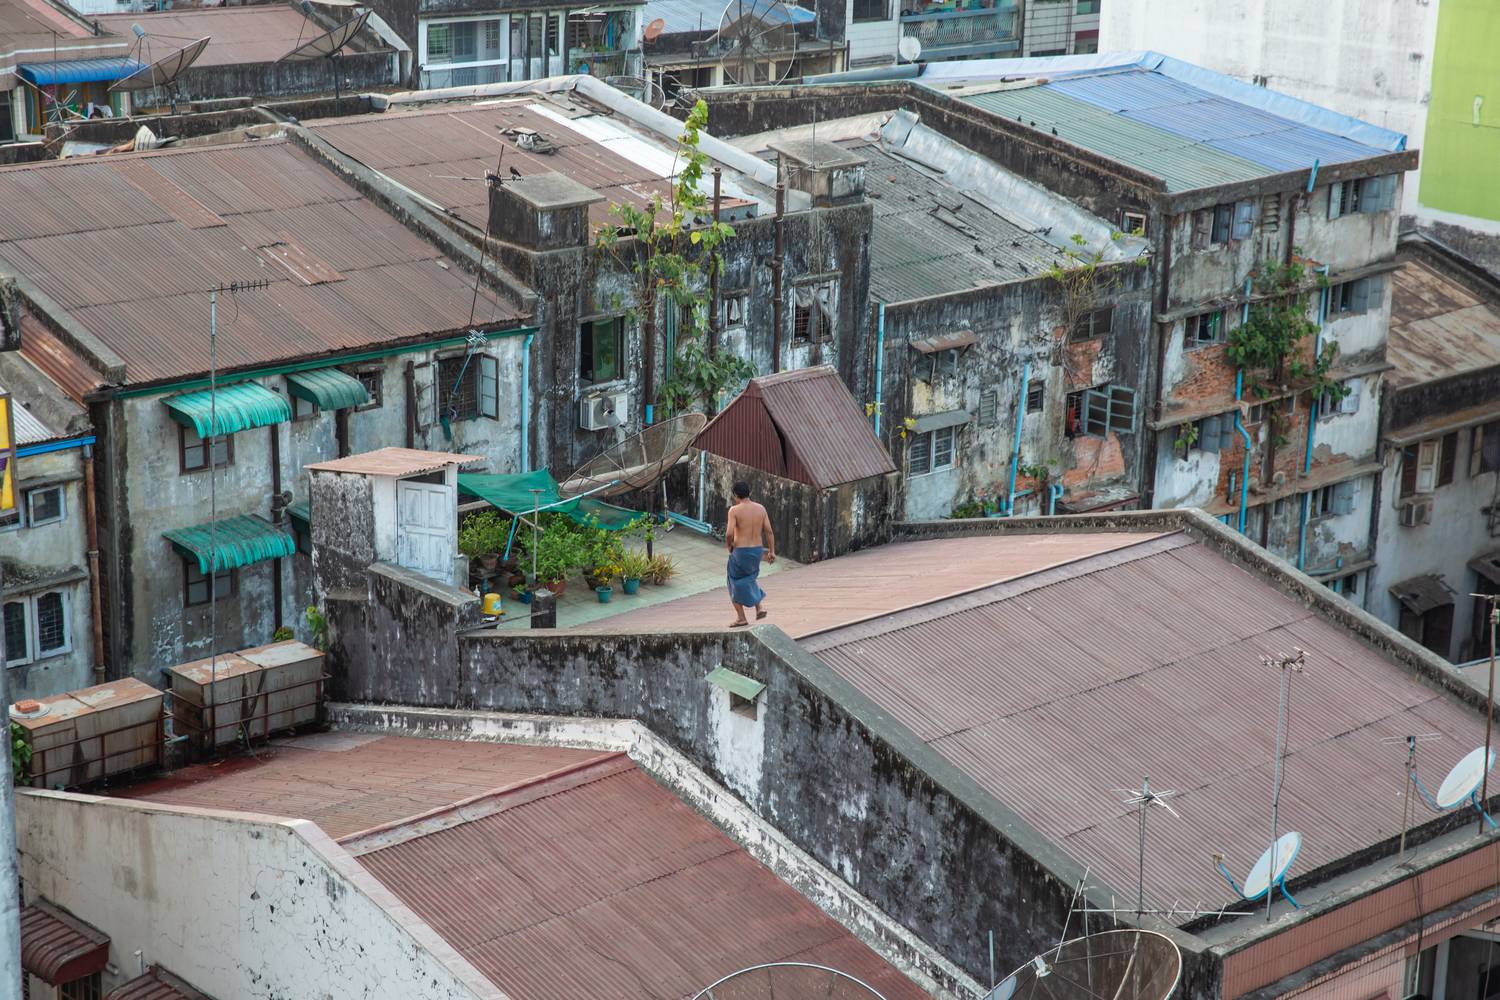 Leben auf dem Dach, Yangon (Rangun) Myanmar (Burma) à Miro May